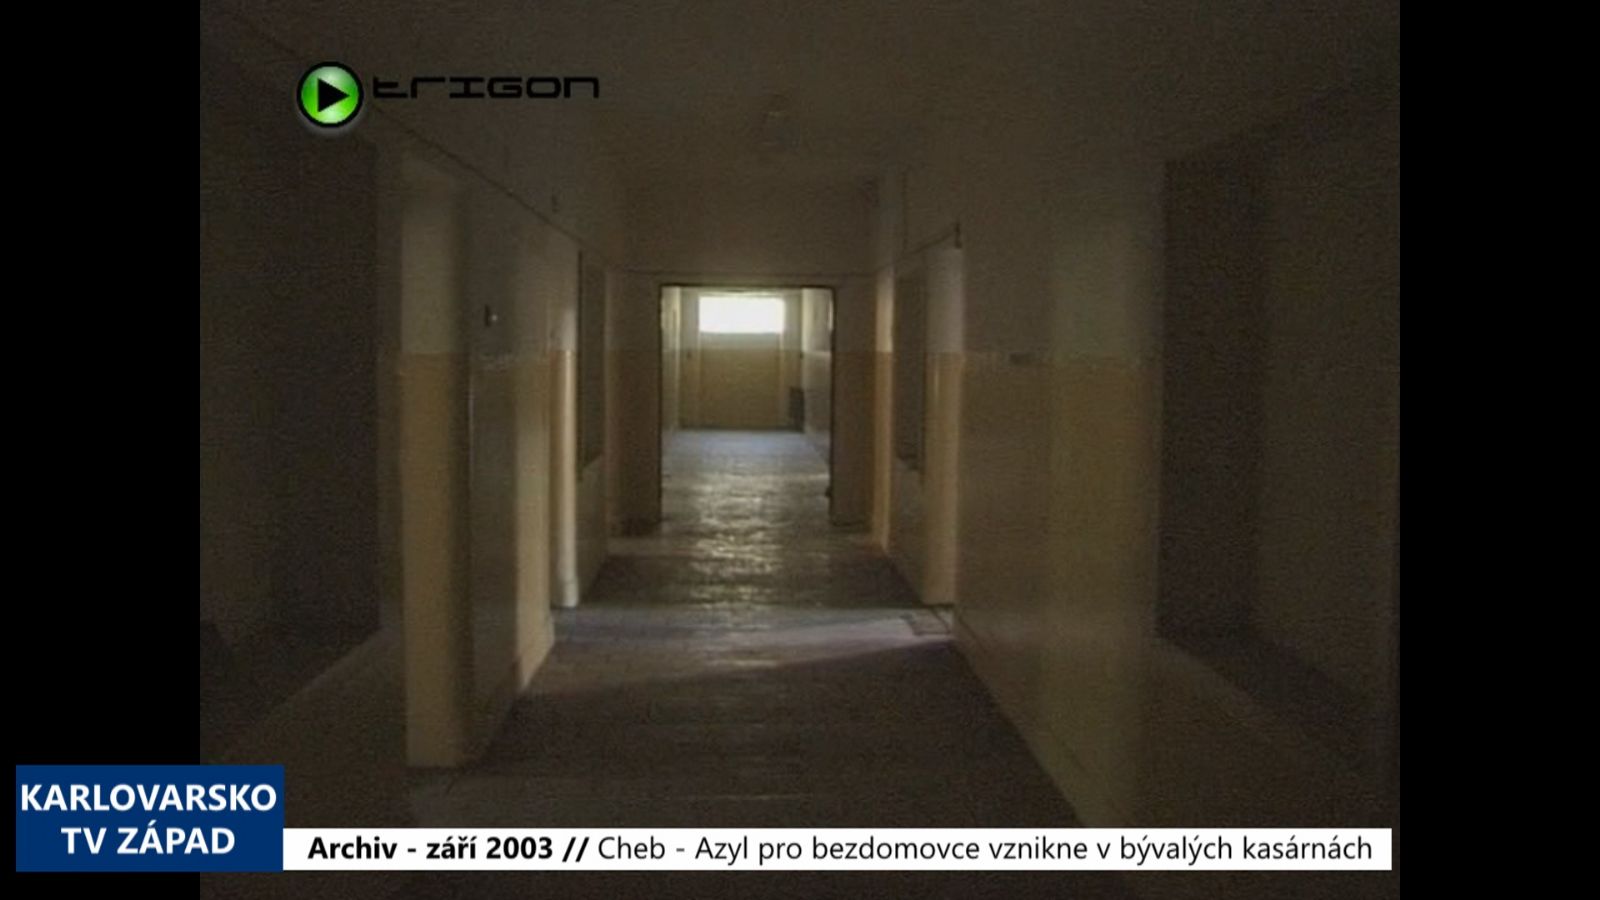 2003 – Cheb: Azyl pro bezdomovce vznikne v bývalých kasárnách (TV Západ)